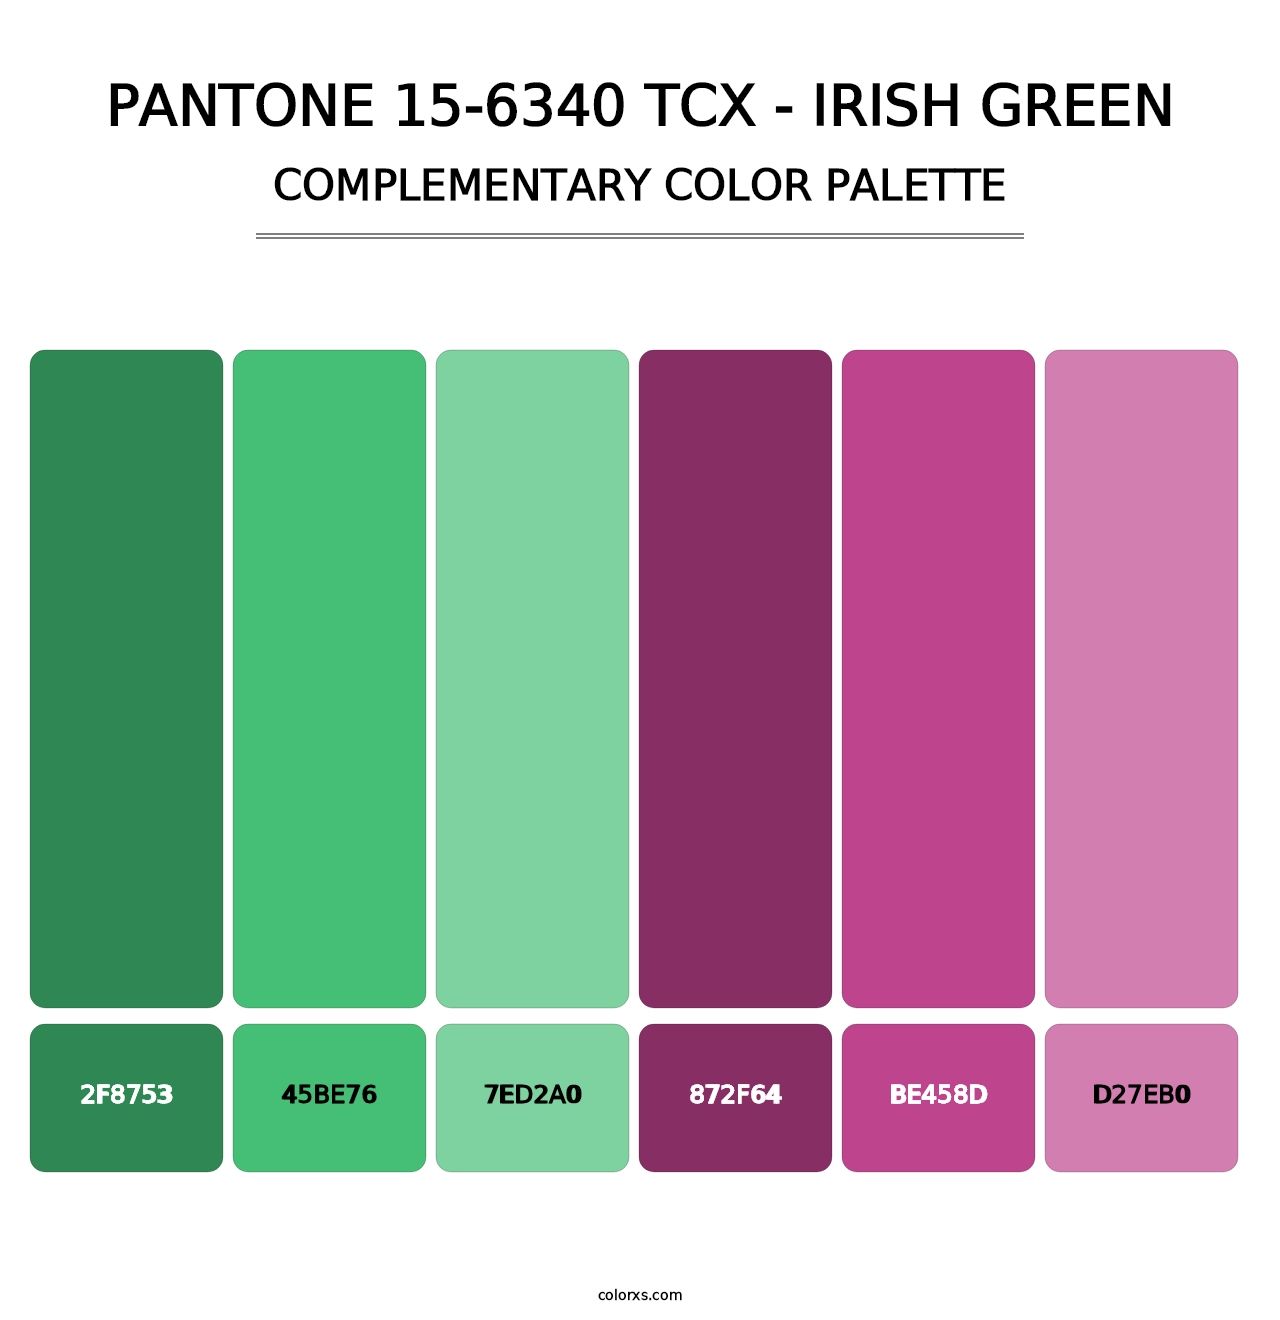 PANTONE 15-6340 TCX - Irish Green - Complementary Color Palette